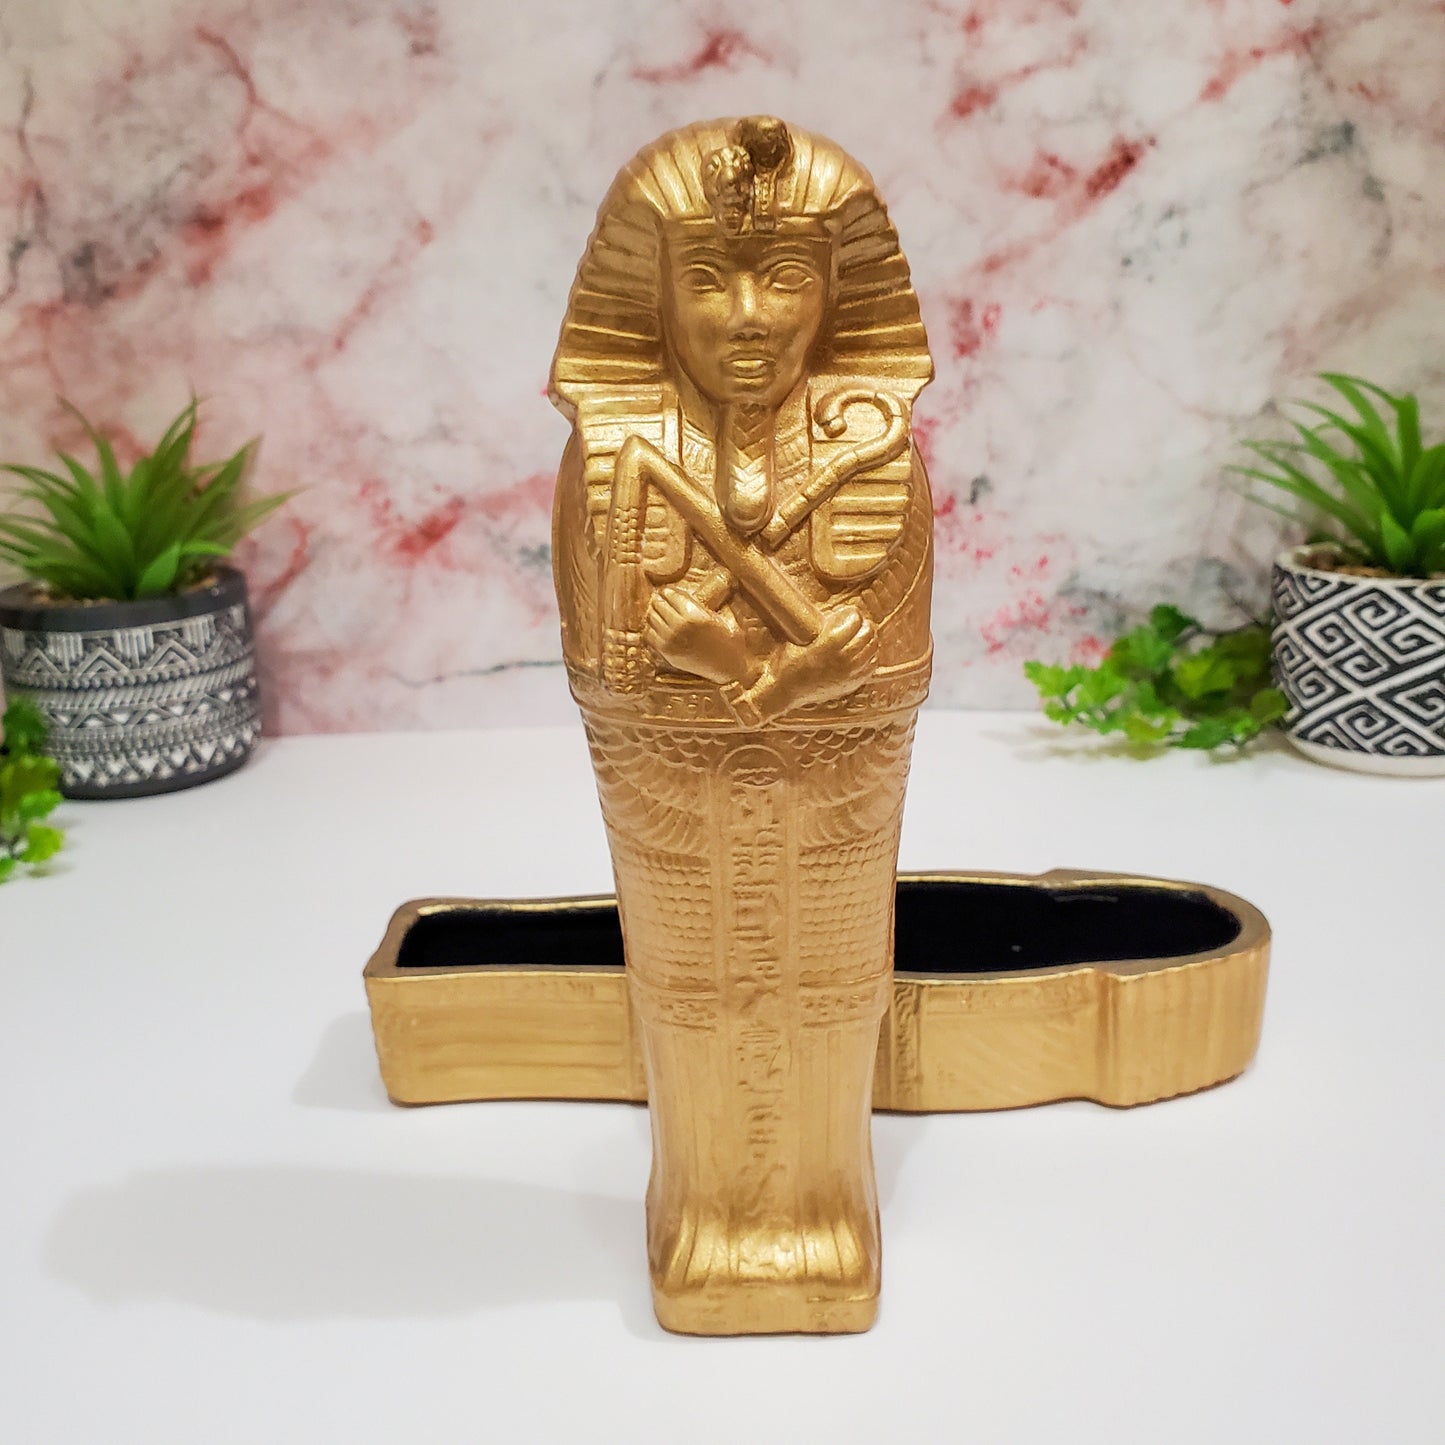 Vintage Egyptian The Sarcophagus of Tutankhamun – Handmade Ceramic Gild King Tut Coffin Trinket Box - Egyptian Home Decor 9.25" Long